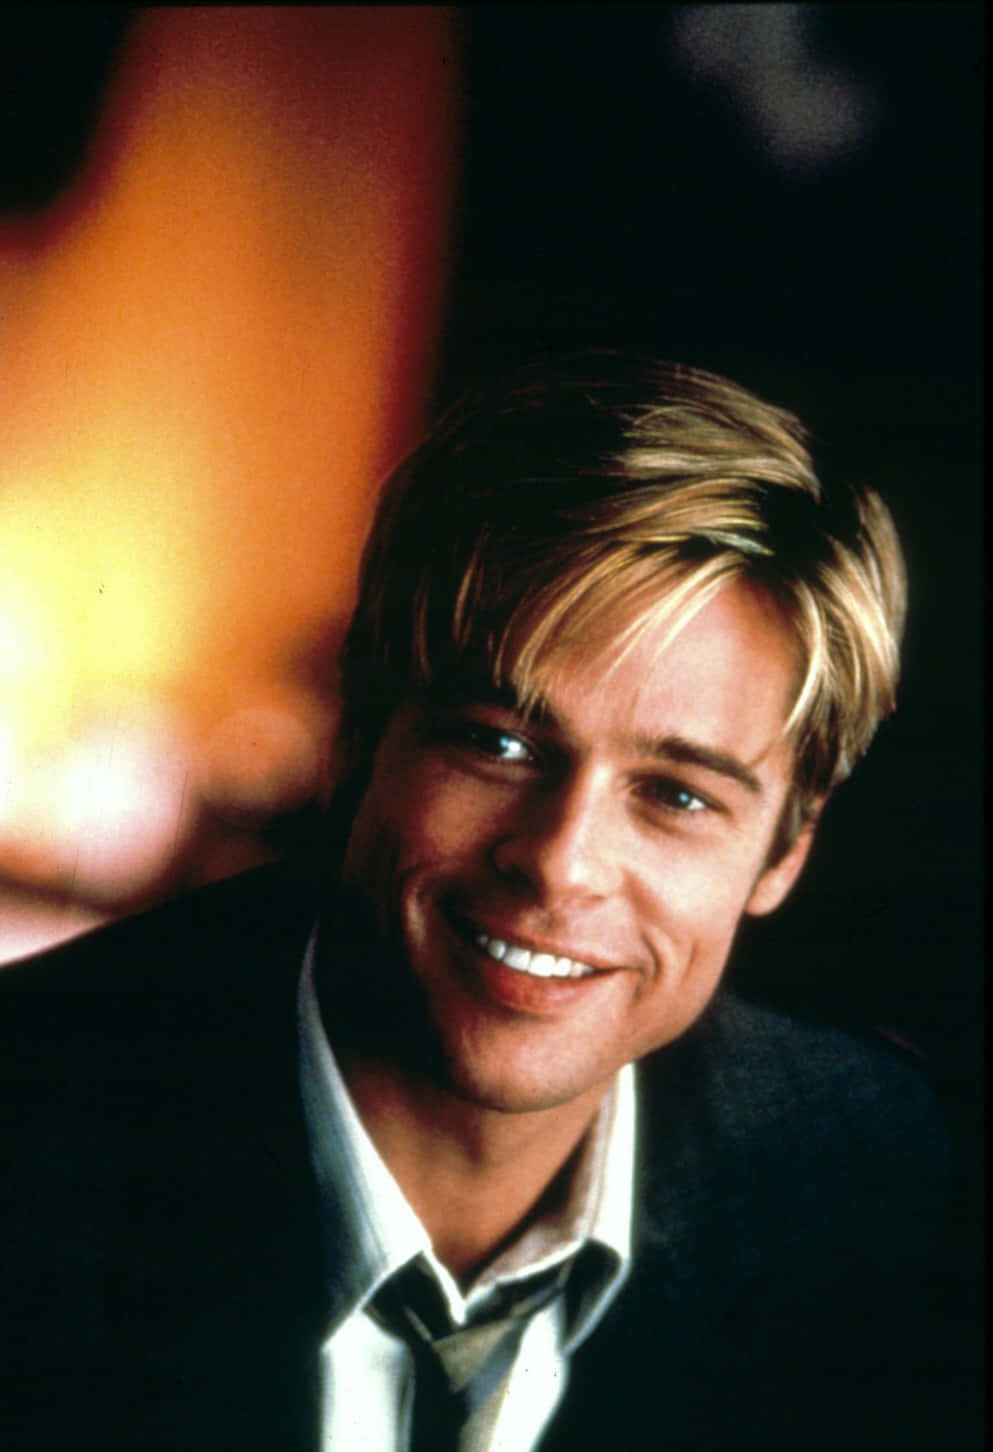 Hollywoodikone Brad Pitt